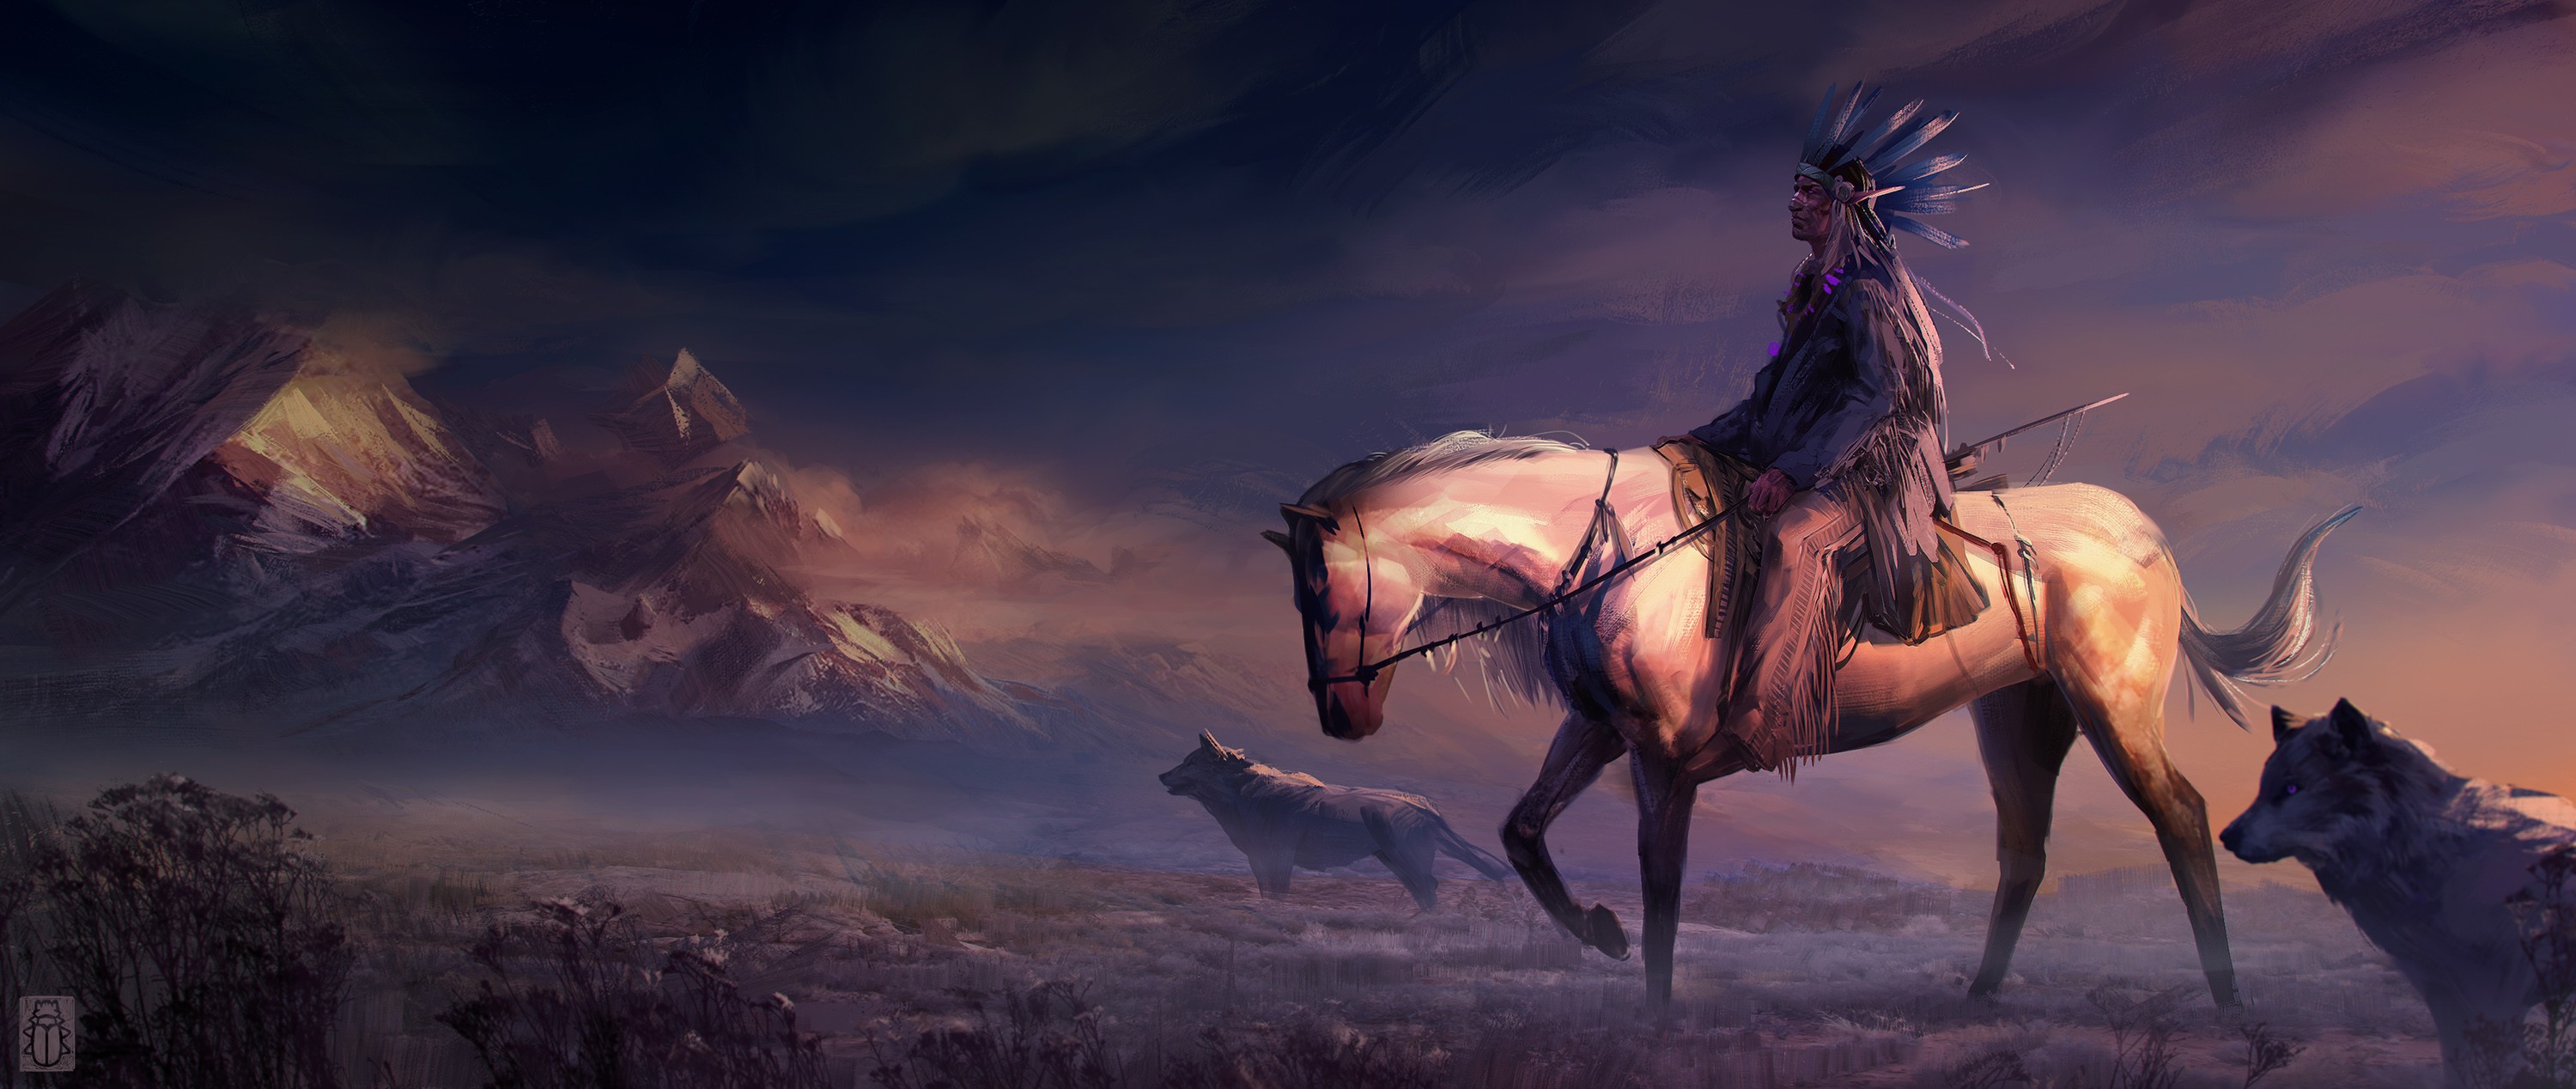 General 3000x1268 artwork digital art fantasy art mountains Native Americans horseman wolf